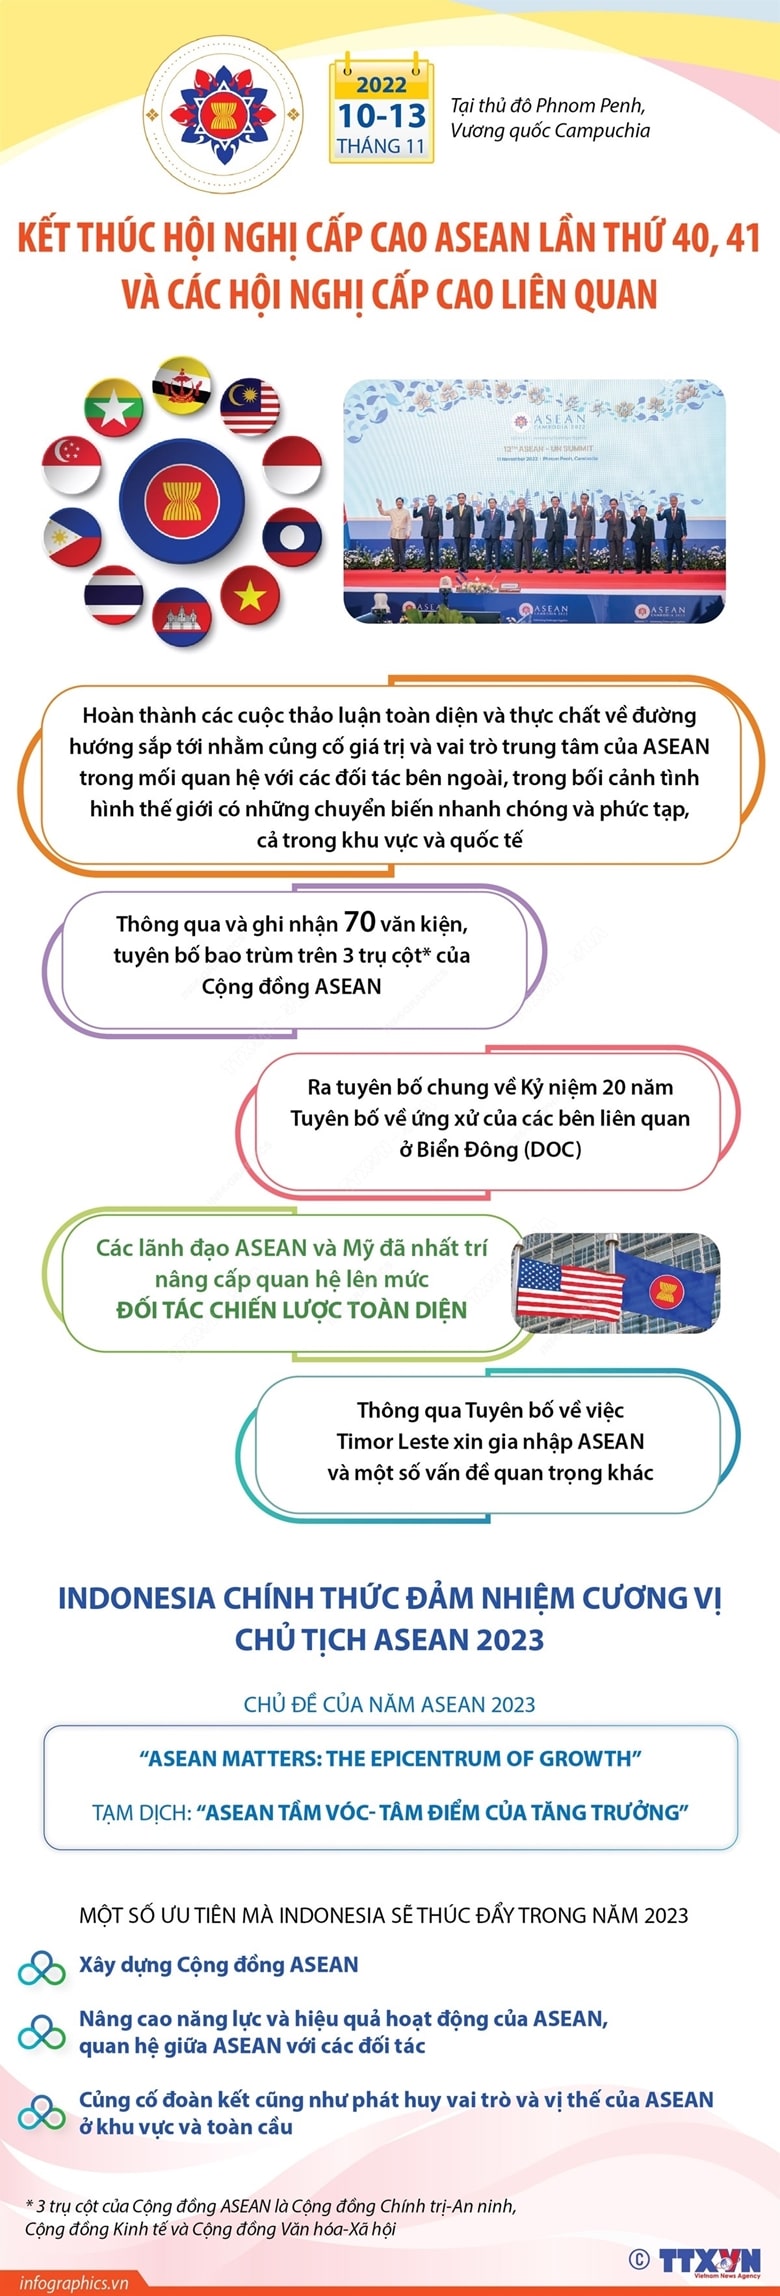 Ket thuc Hoi nghi Cap cao ASEAN lan thu 40 41 min - Kết thúc Hội nghị Cấp cao ASEAN lần thứ 40, 41 và các hội nghị cấp cao liên quan